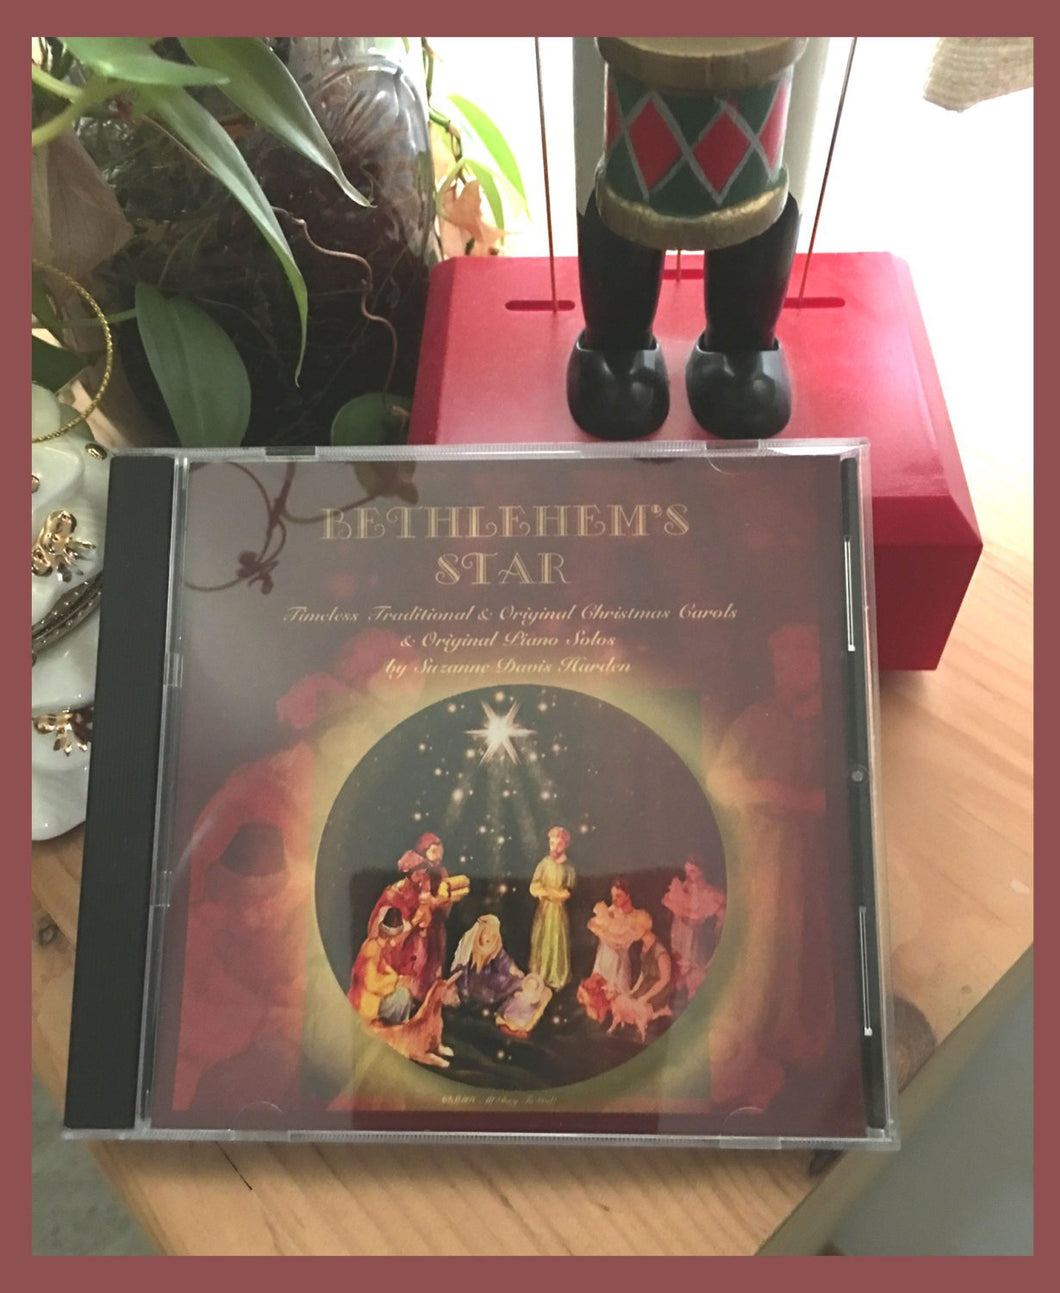 AUDIO CD: Bethlehem’s Star-Timeless Traditional/Original Christmas Carols and Original Piano Solos Audio CD by Suzanne Davis Harden